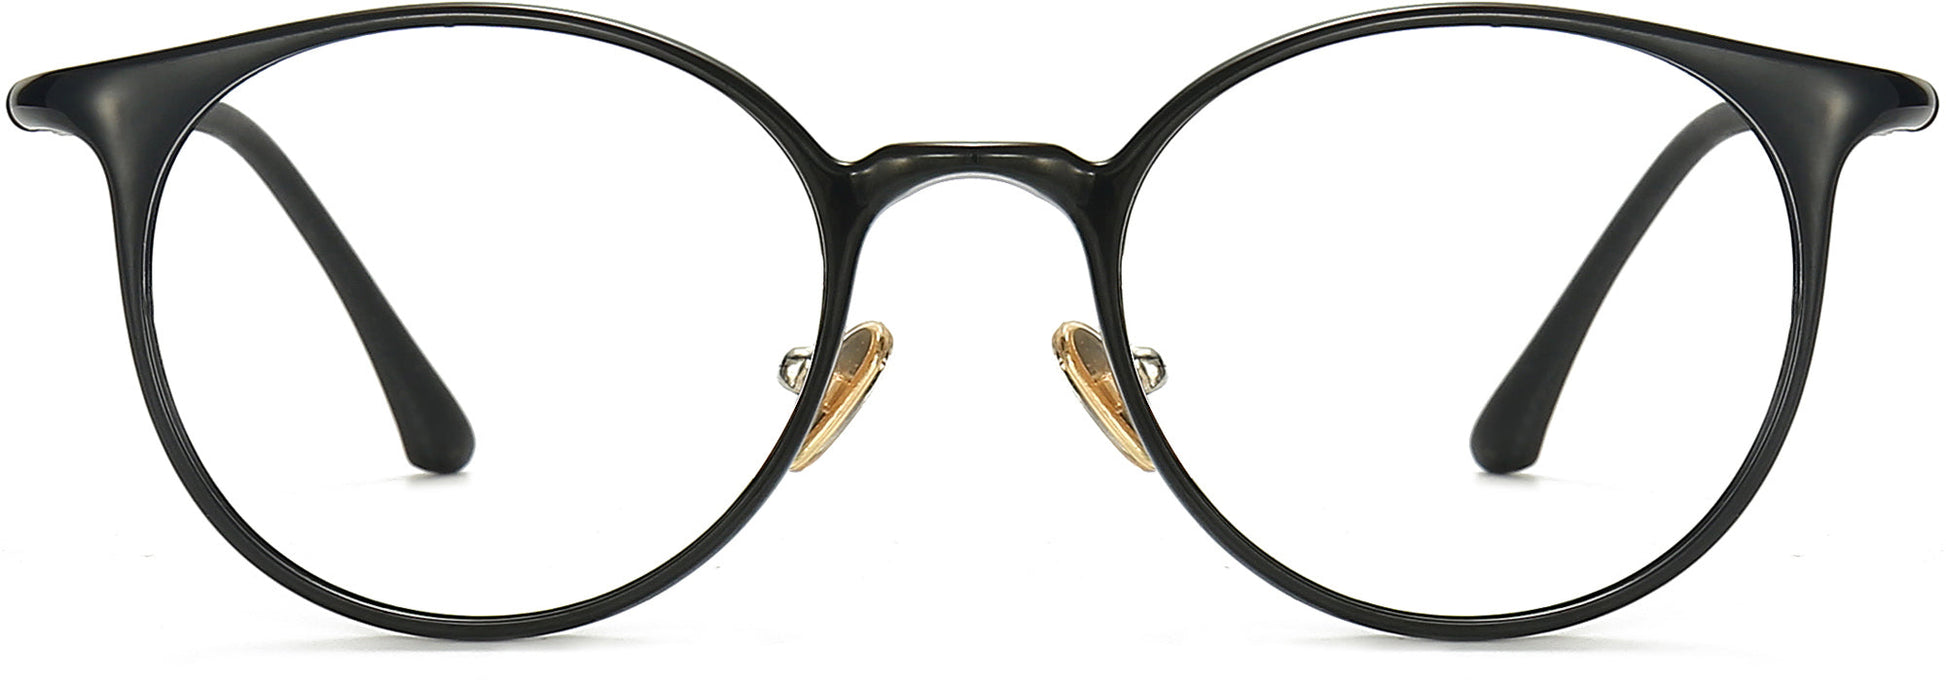 Cecelia Round Black Eyeglasses from ANRRI, front view